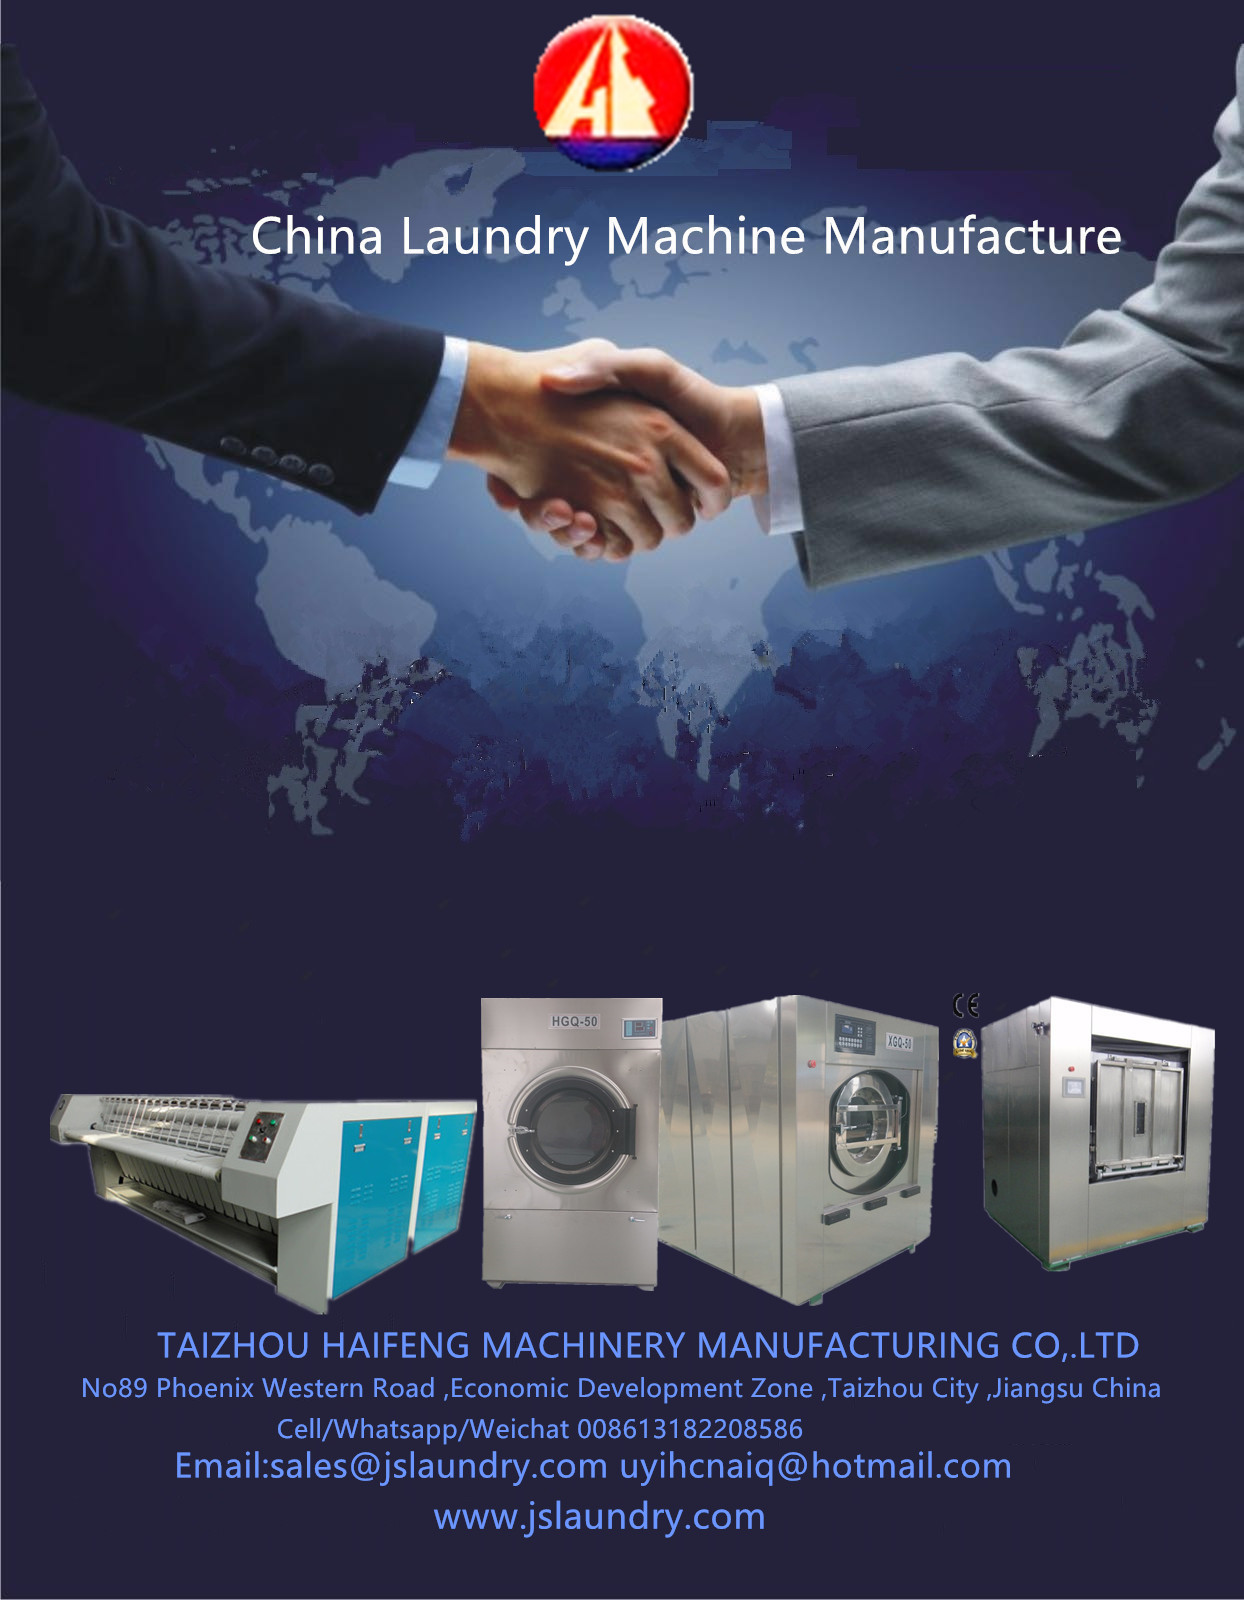 Washing machine Manufacture - 副本